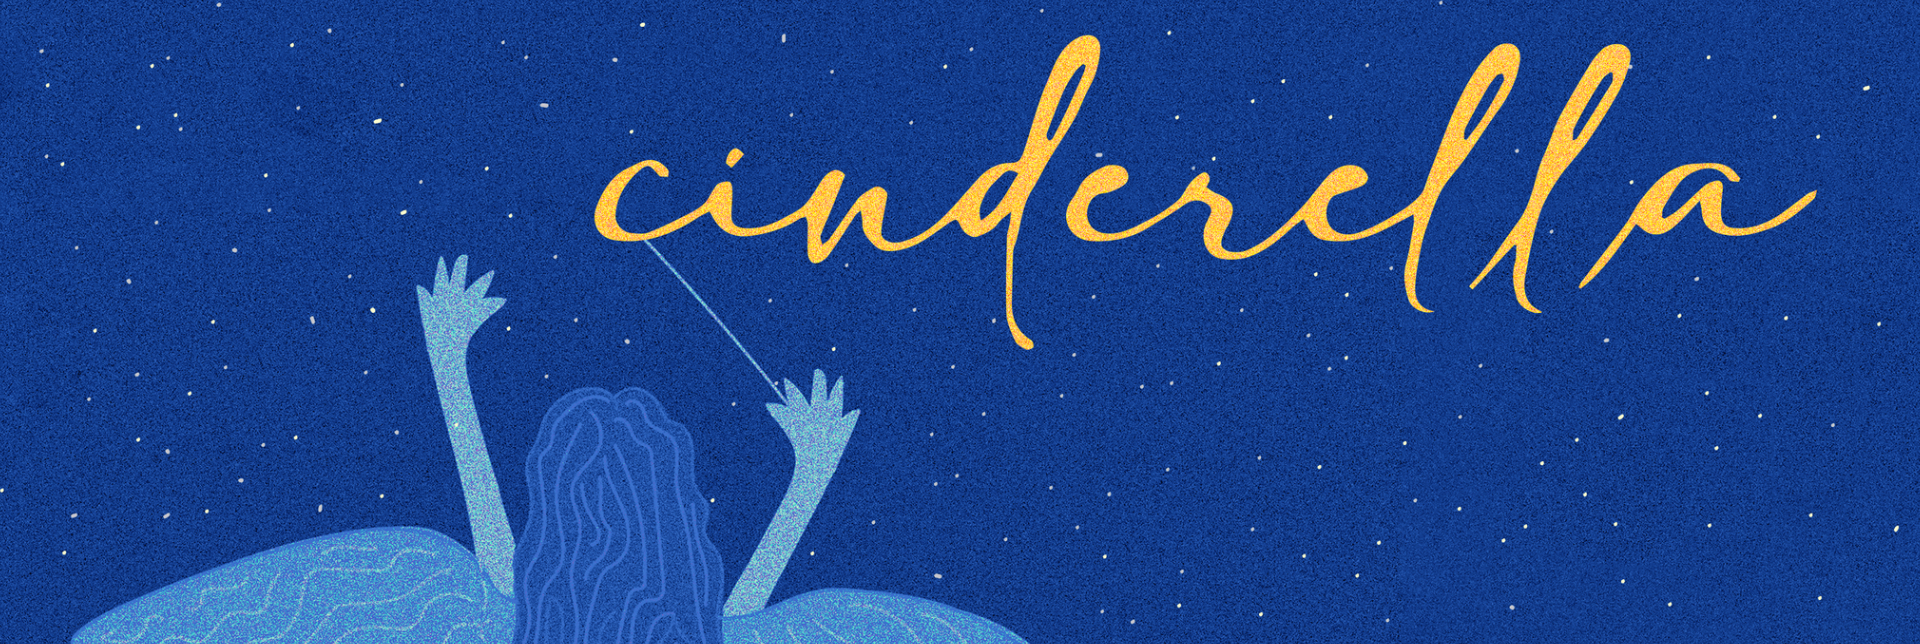 Opera North Presents Little Listeners: Cinderella